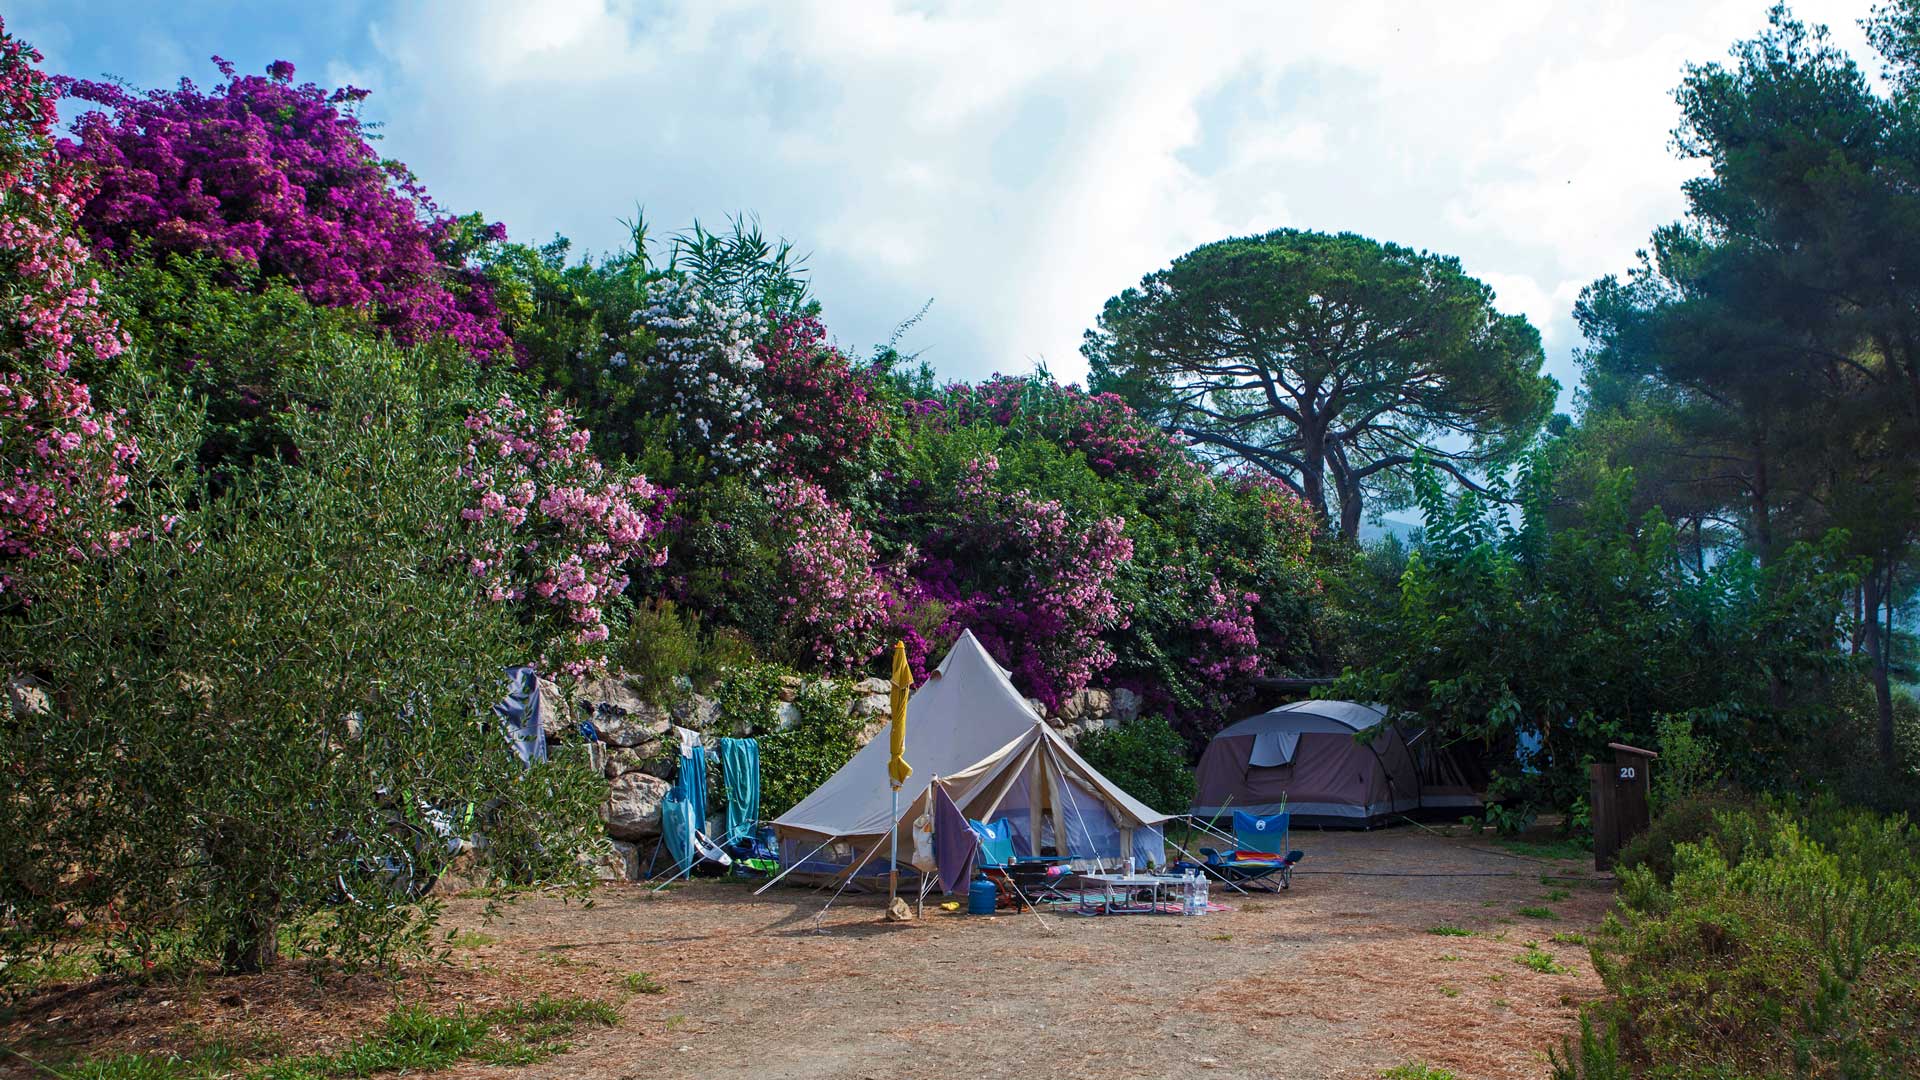 Campingzelte, Orti di Mare: Campingplatz in der Nähe vom Meer - Elba - Italien